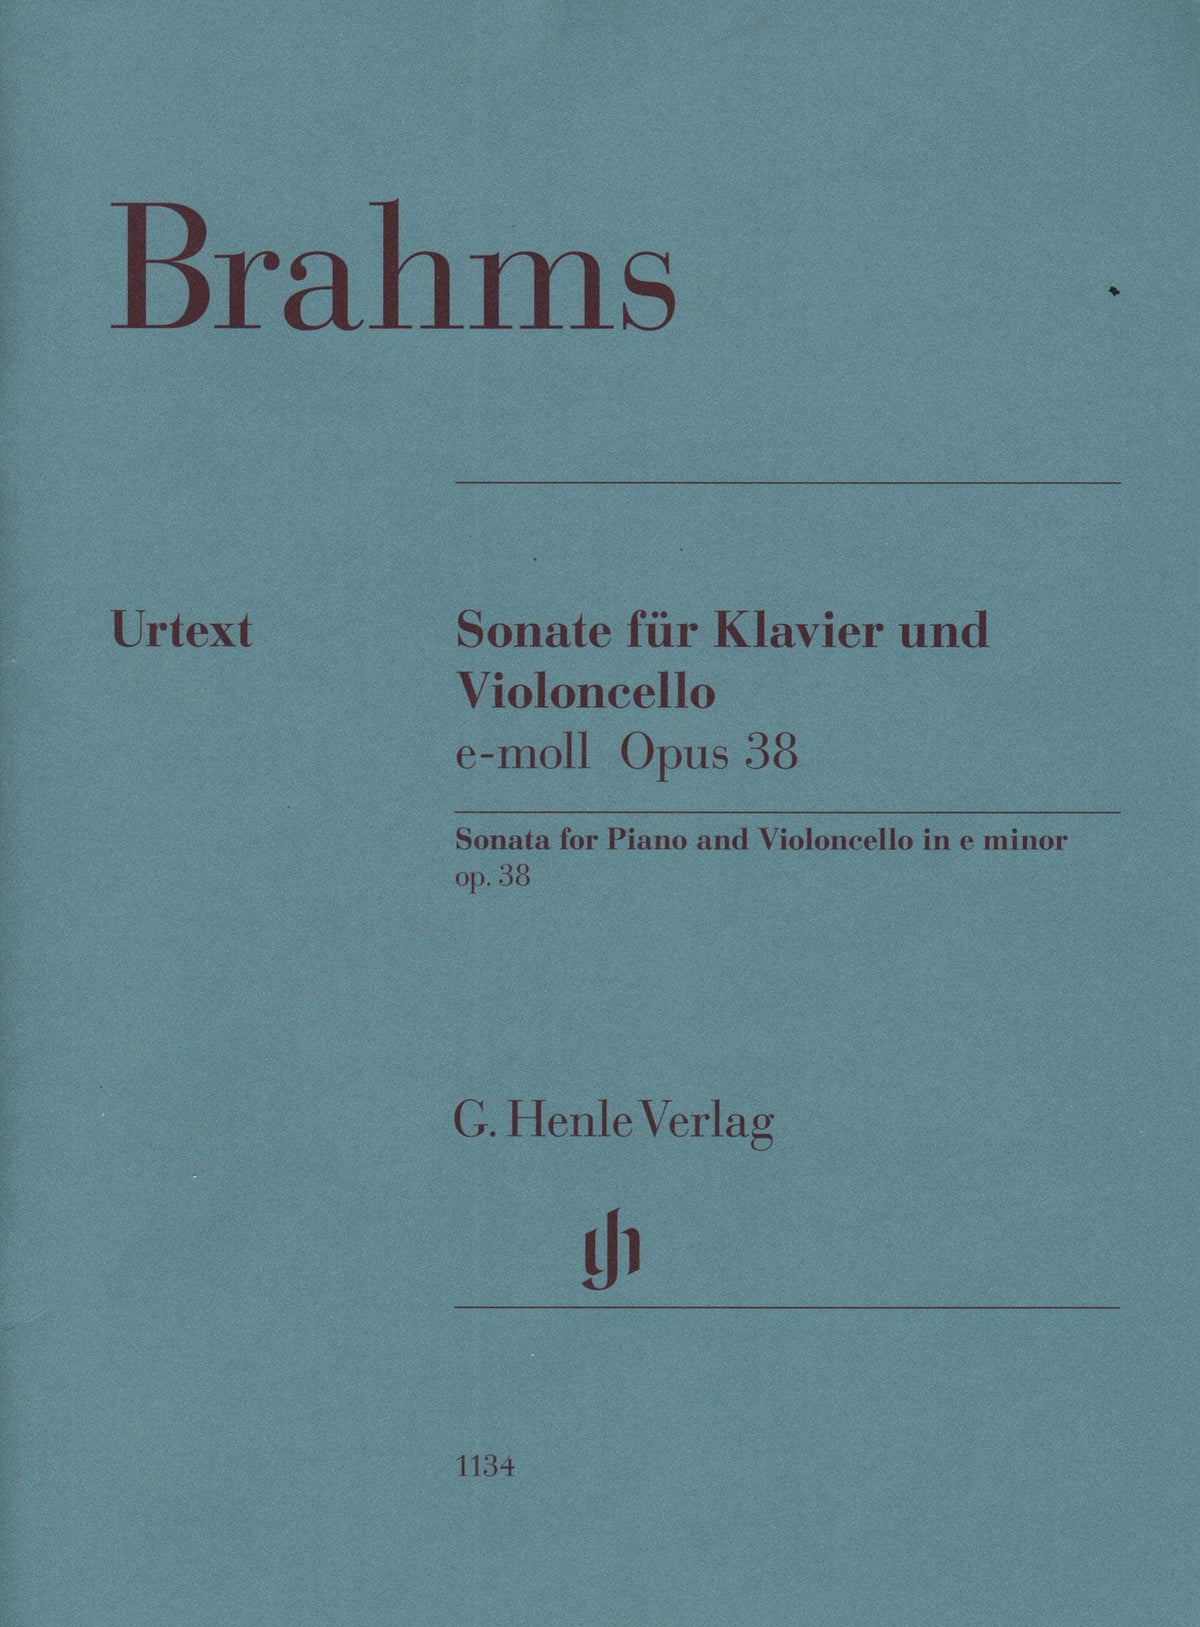 Brahms, Johannes - Sonata No 1 in e minor Op 38 for Cello and Piano - Henle Verlag URTEXT Edition